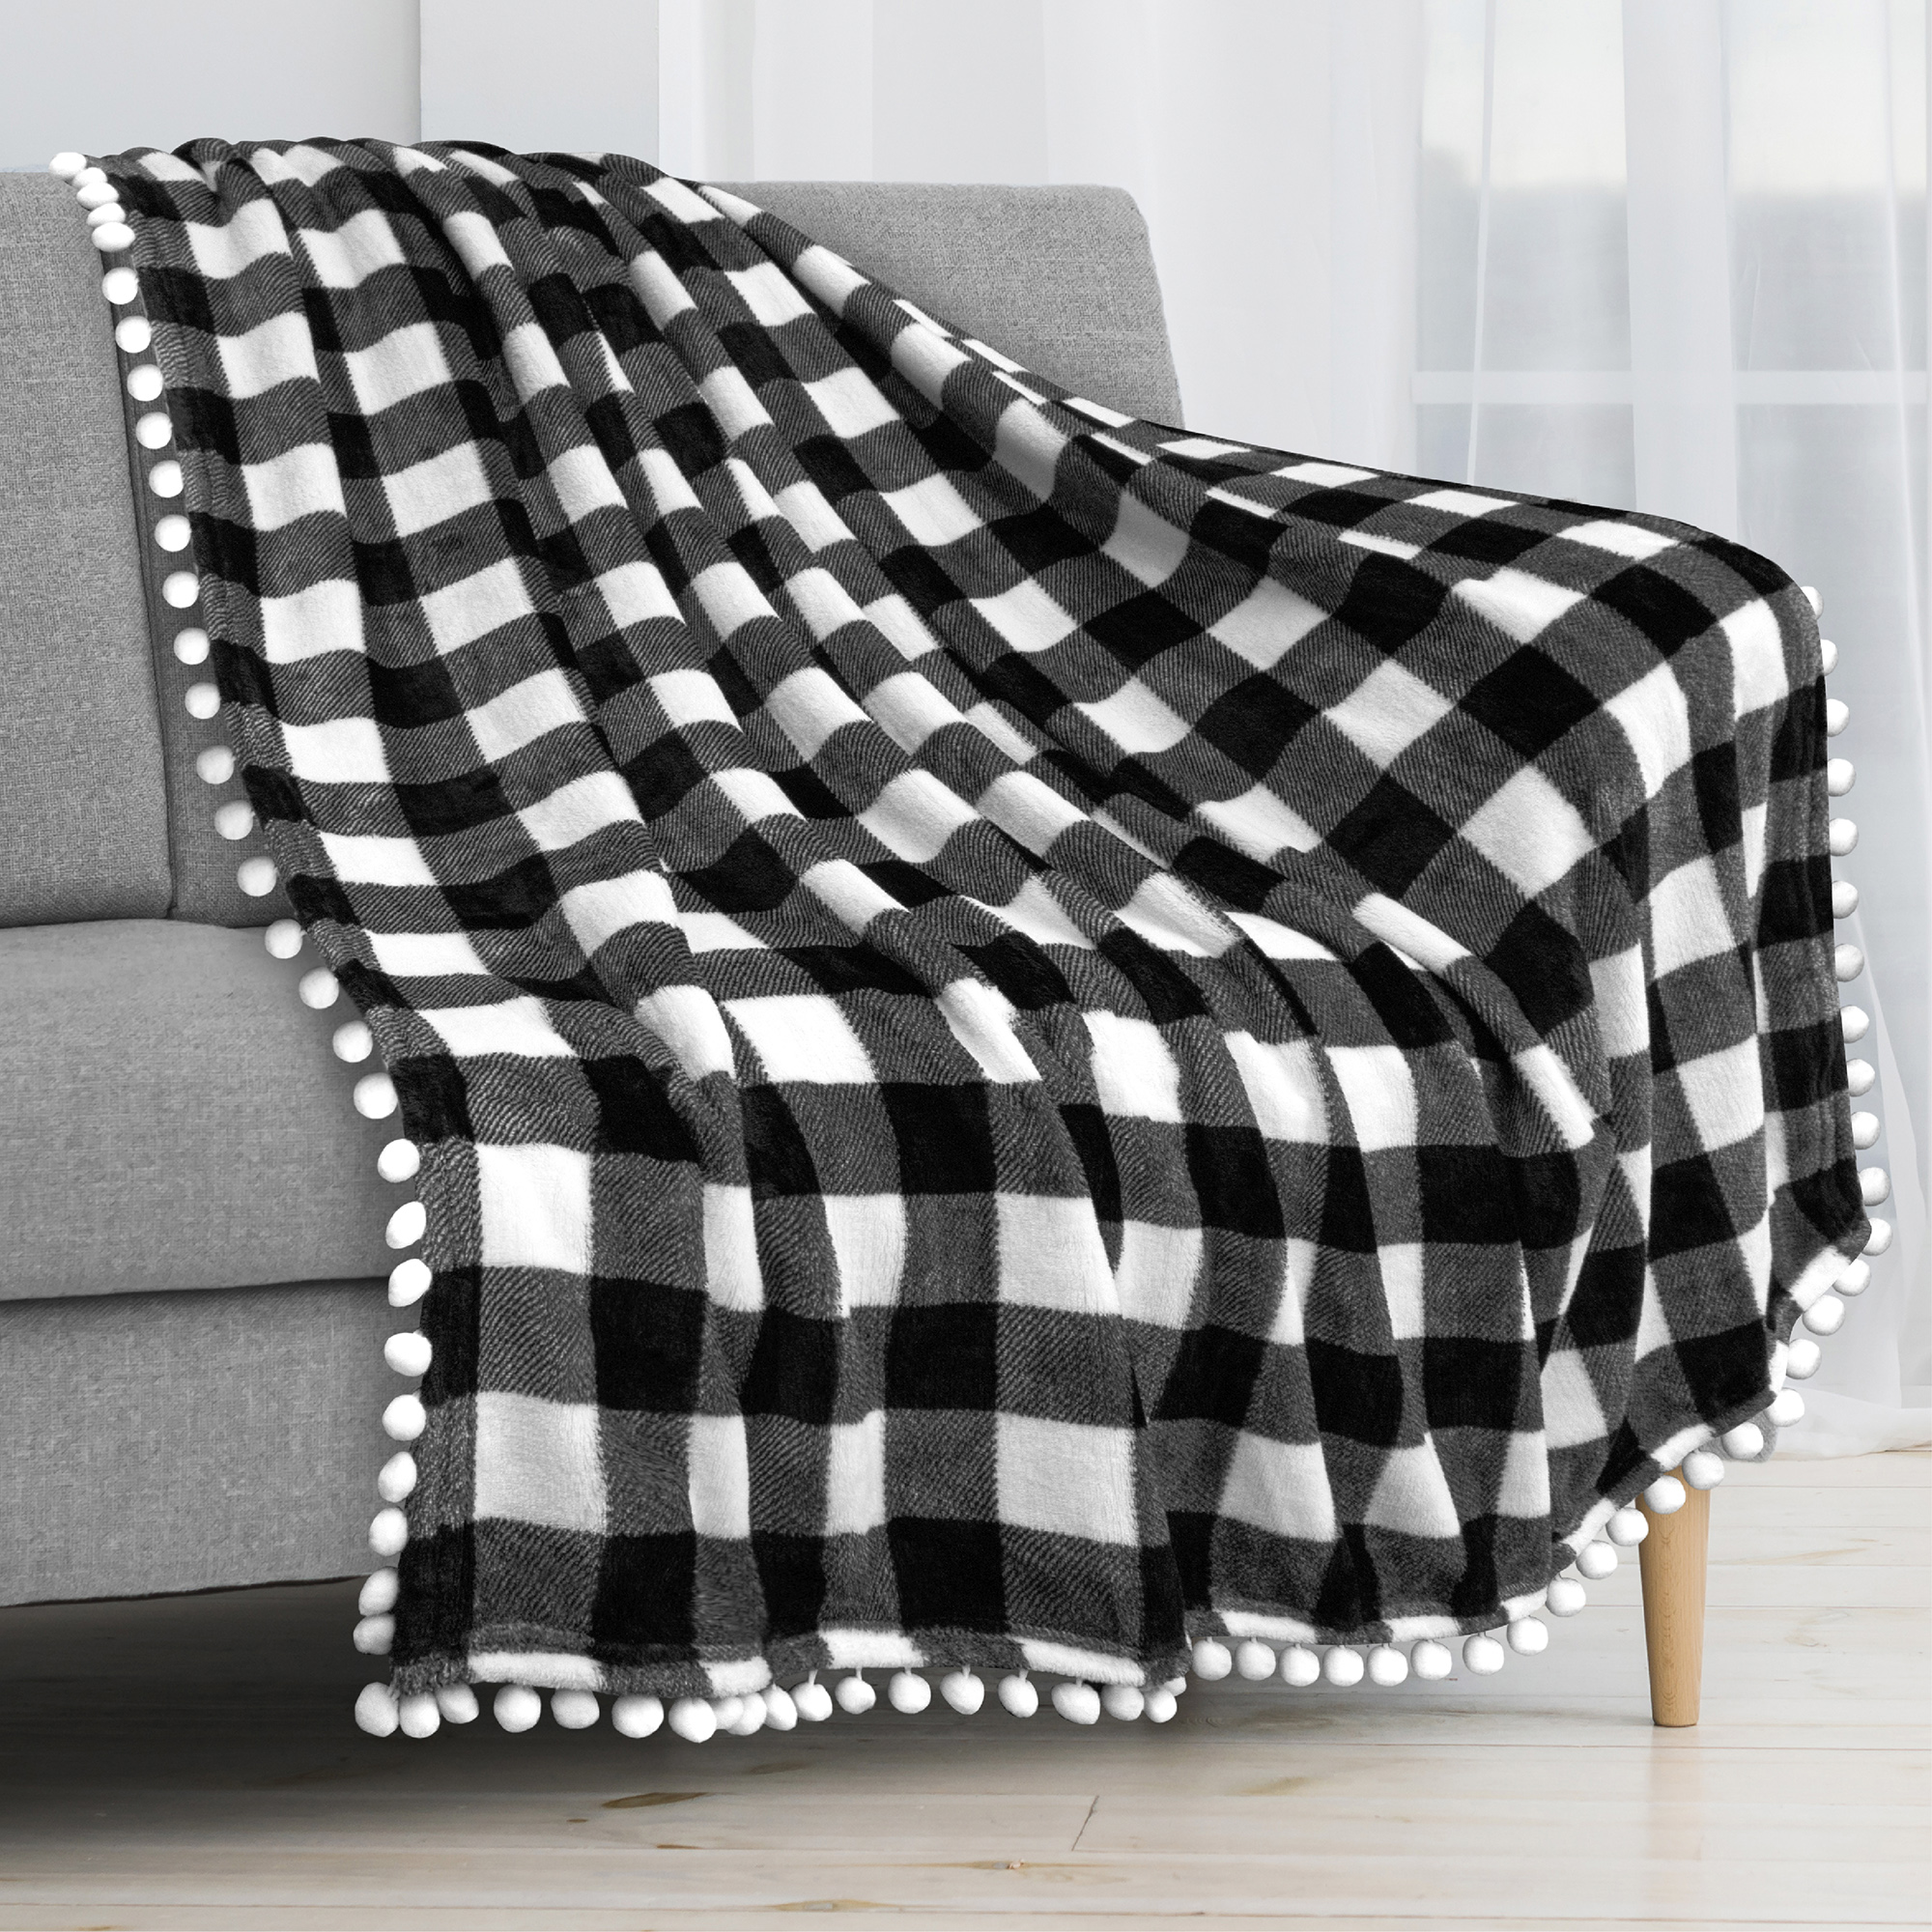 thumbnail 30 - Plaid Buffalo Checker Pom Pom Fringe Throw Blanket Soft Fleece for Sofa Couch